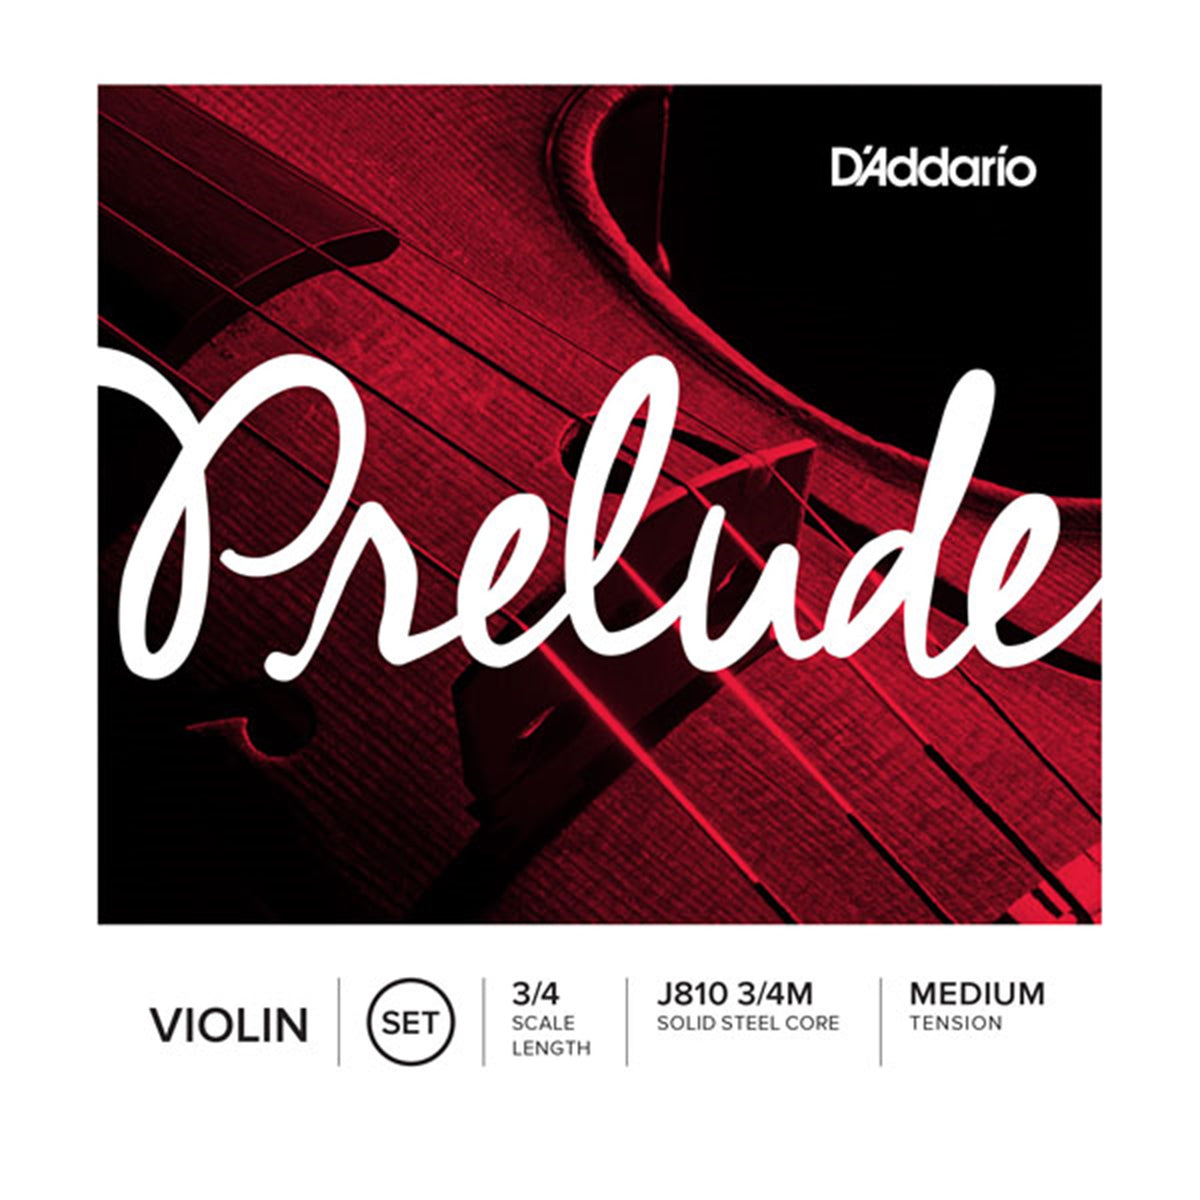 D'Addario Prelude Violin Single G String